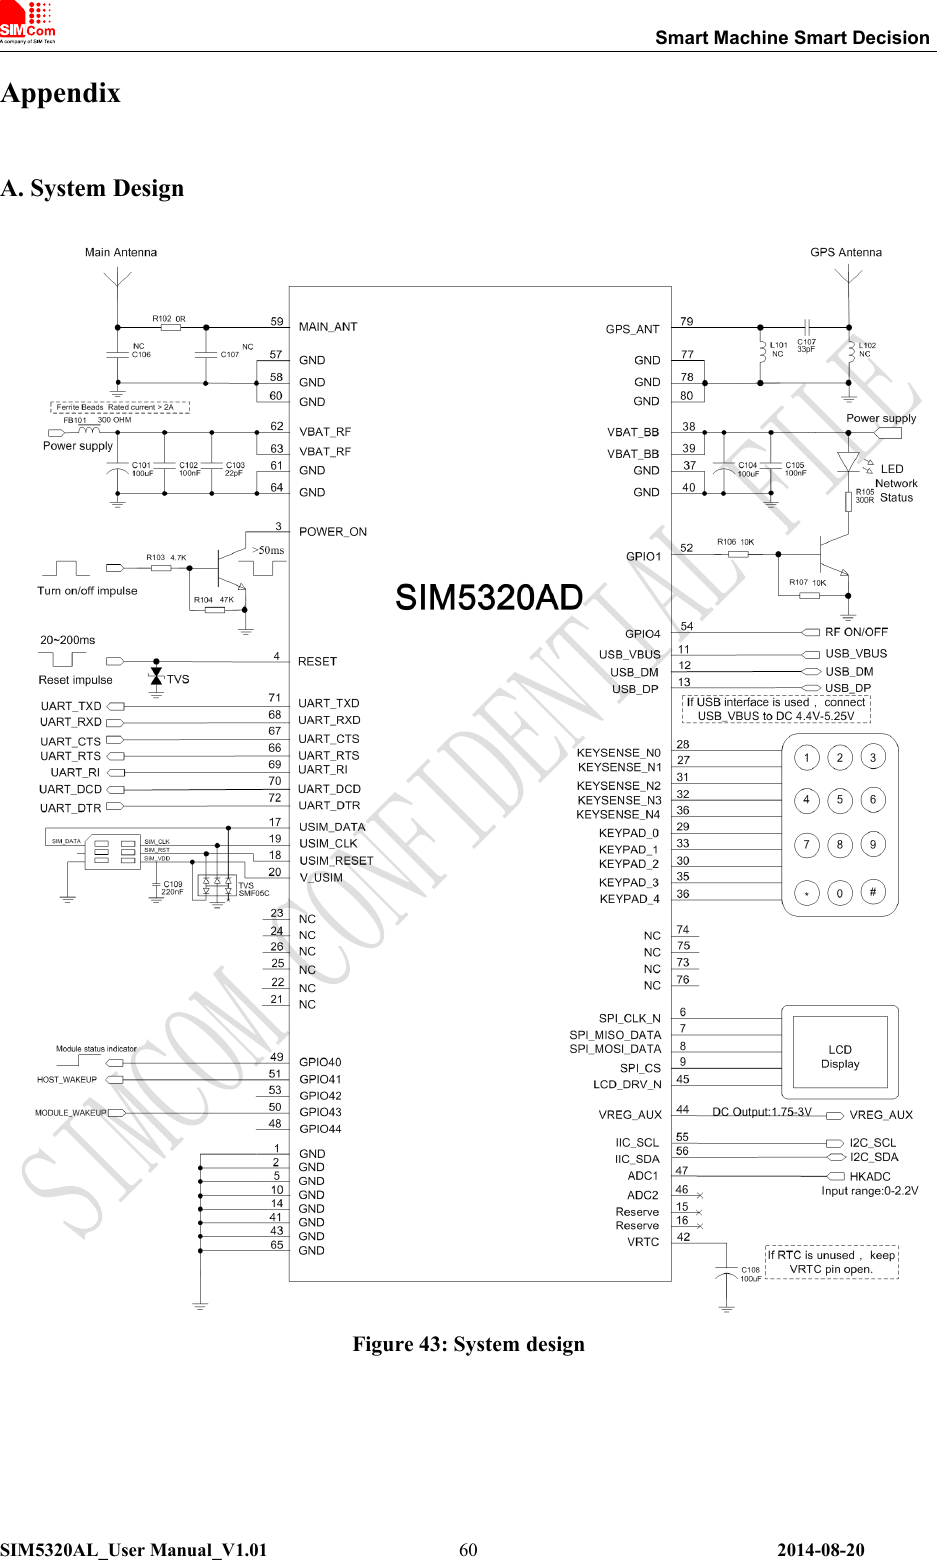 Smart Machine Smart DecisionSIM5320AL_User Manual_V1.01 2014-08-2060AppendixA. System DesignFigure 43: System design